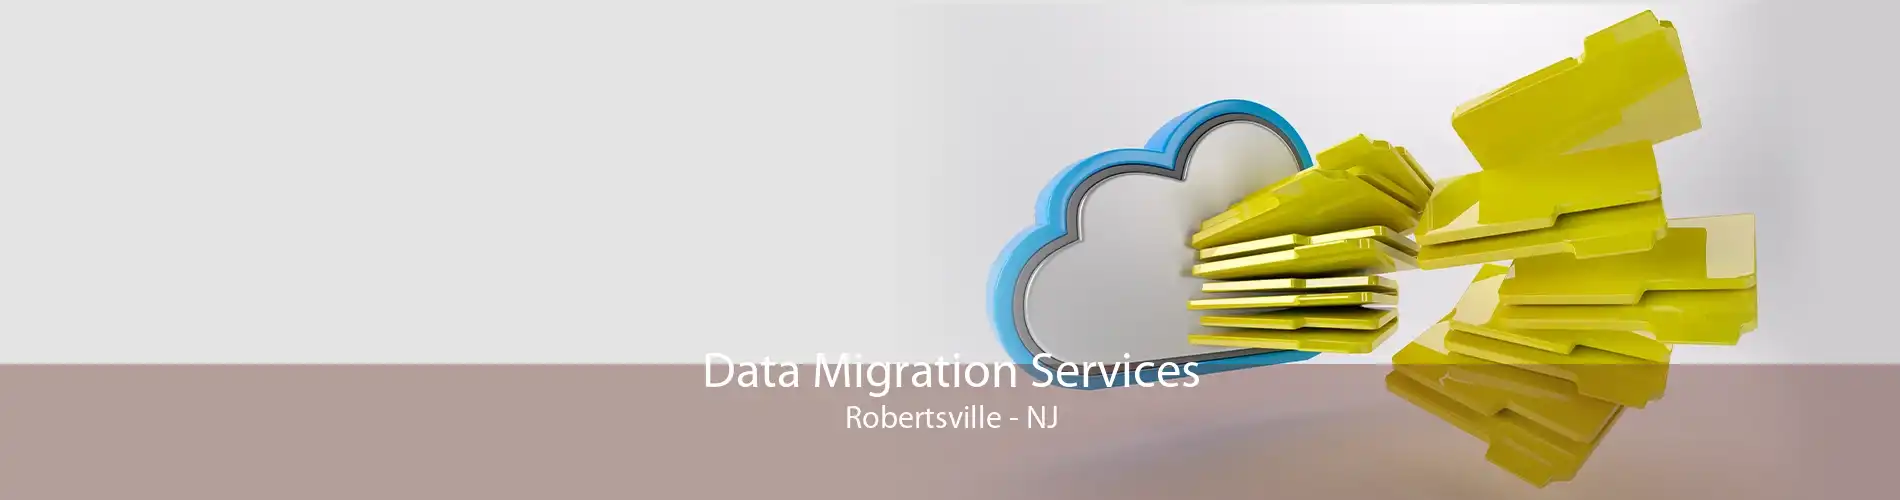 Data Migration Services Robertsville - NJ